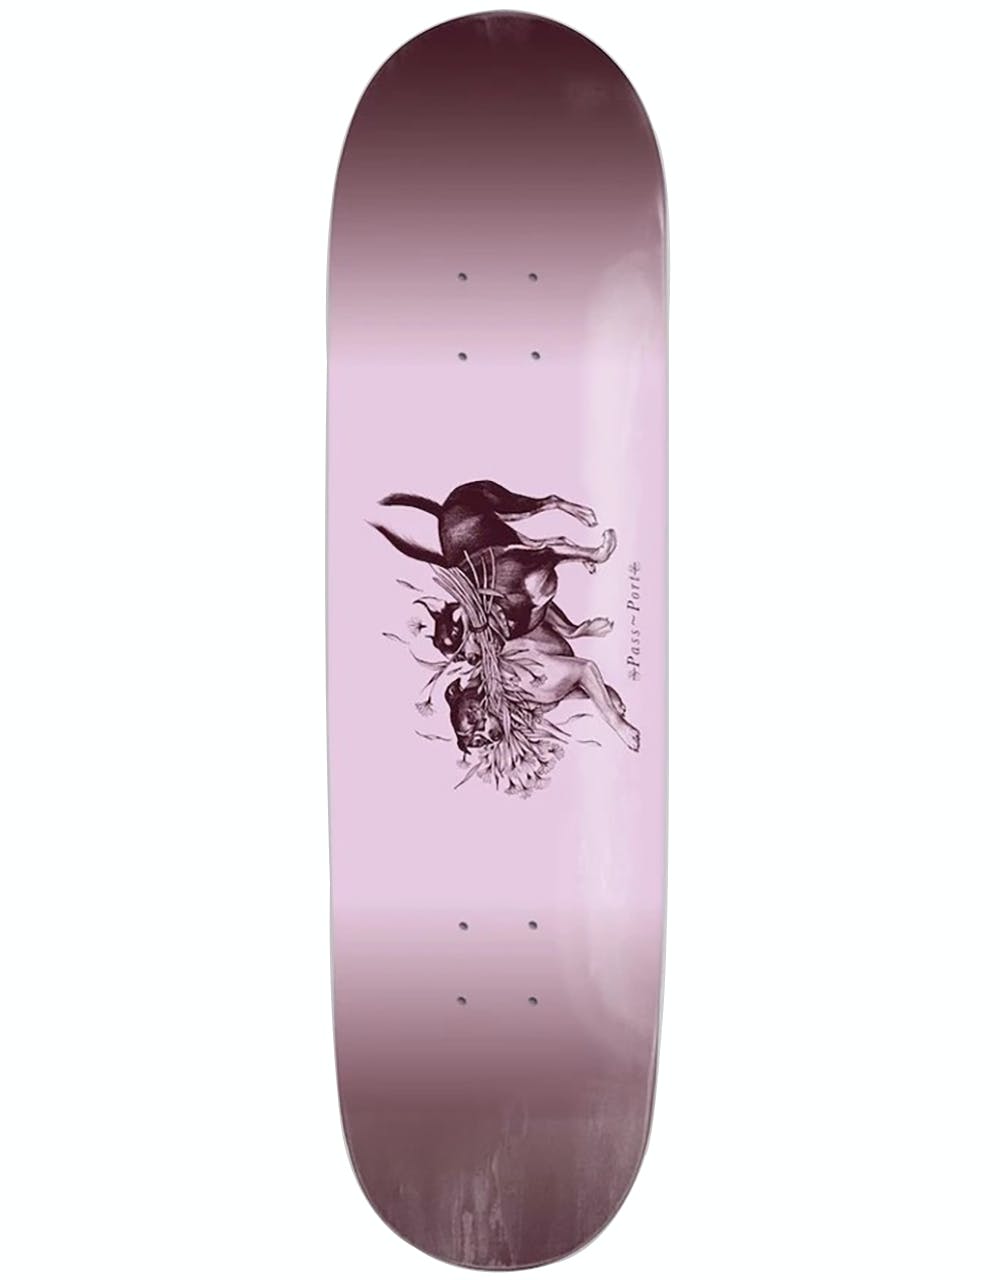 Pass Port Lavender 'Doggo Series' Skateboard Deck - 8.25"